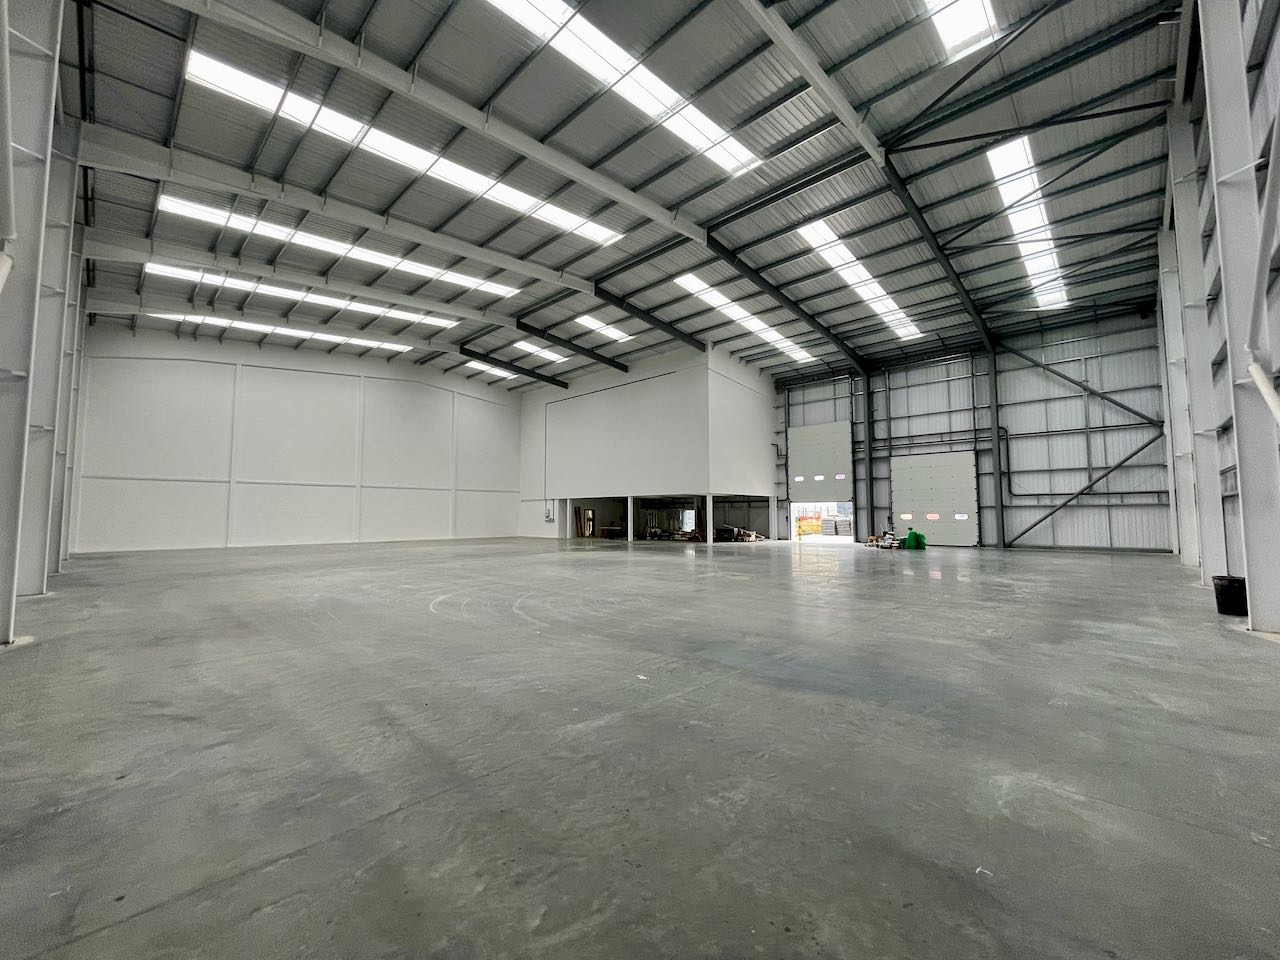 7a-quad-warehouse